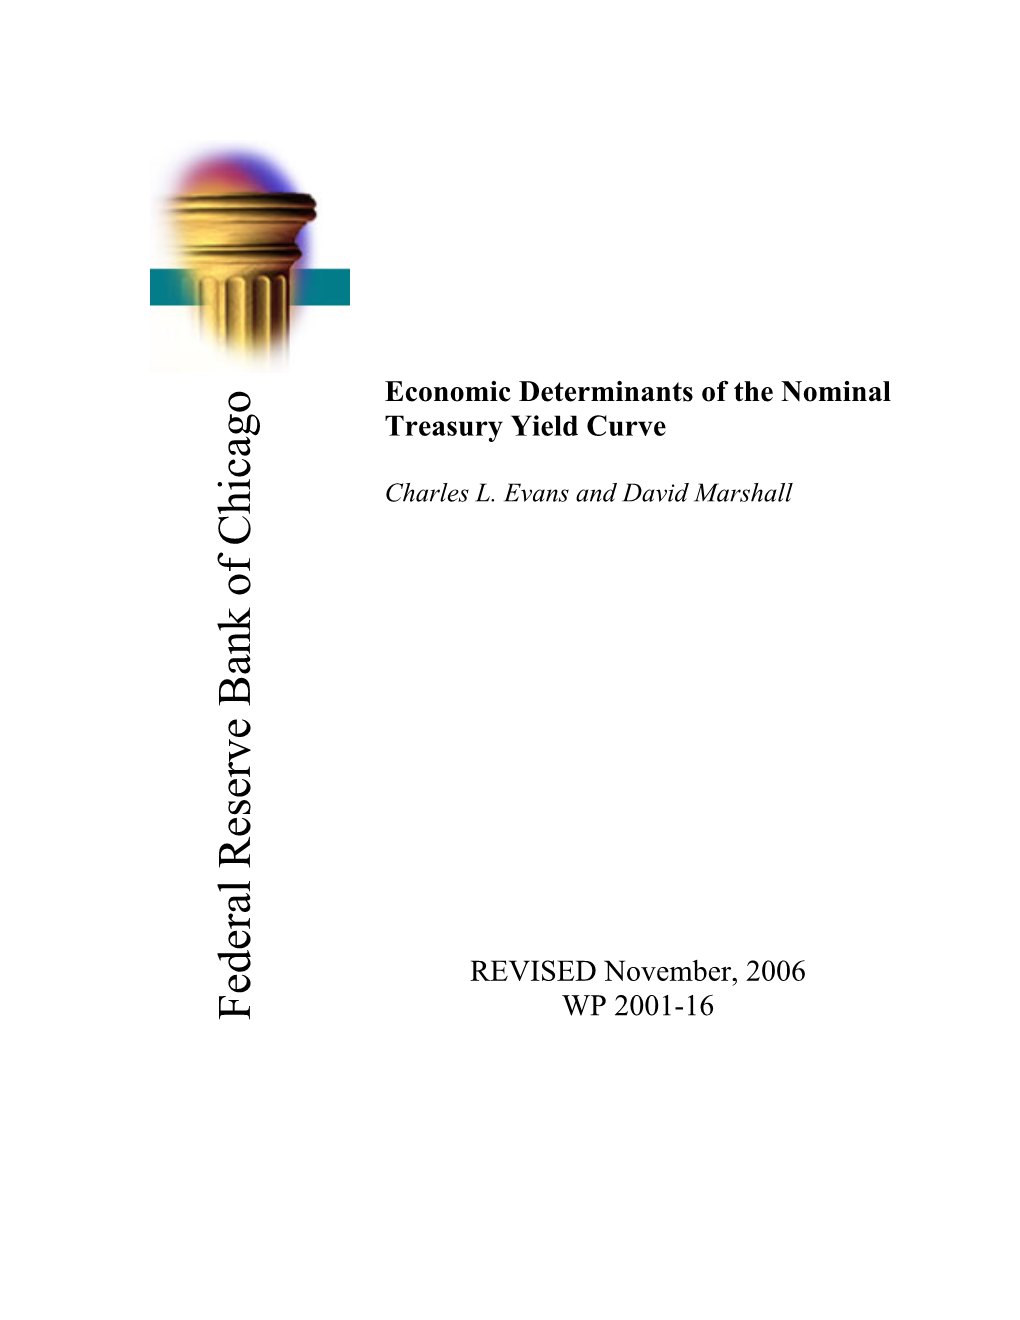 Economic Determinants of the Nominal Treasury Yield Curve ;